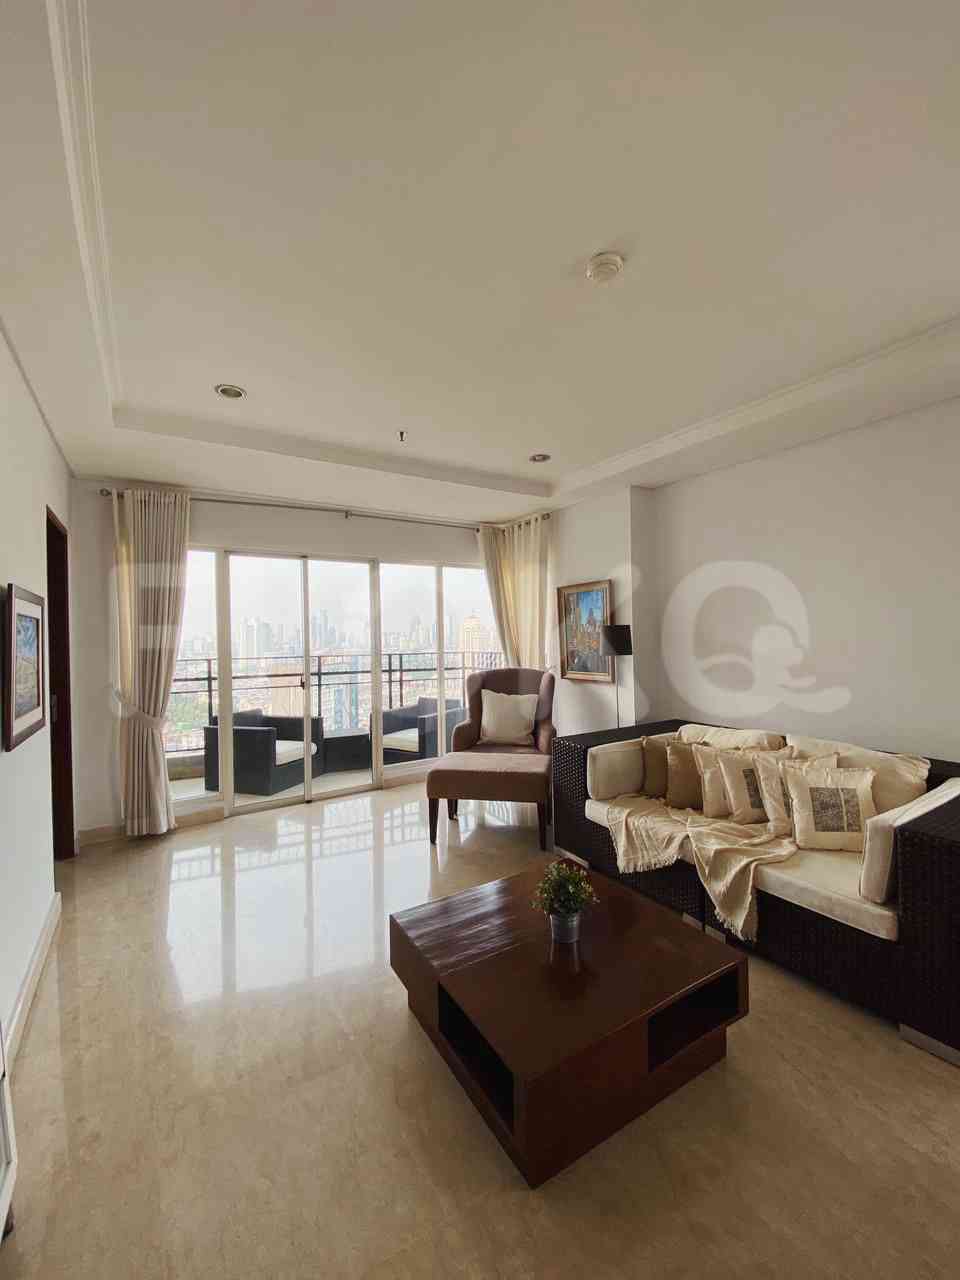 4 Bedroom on 26th Floor for Rent in Permata Hijau Suites Apartment - fpef10 7